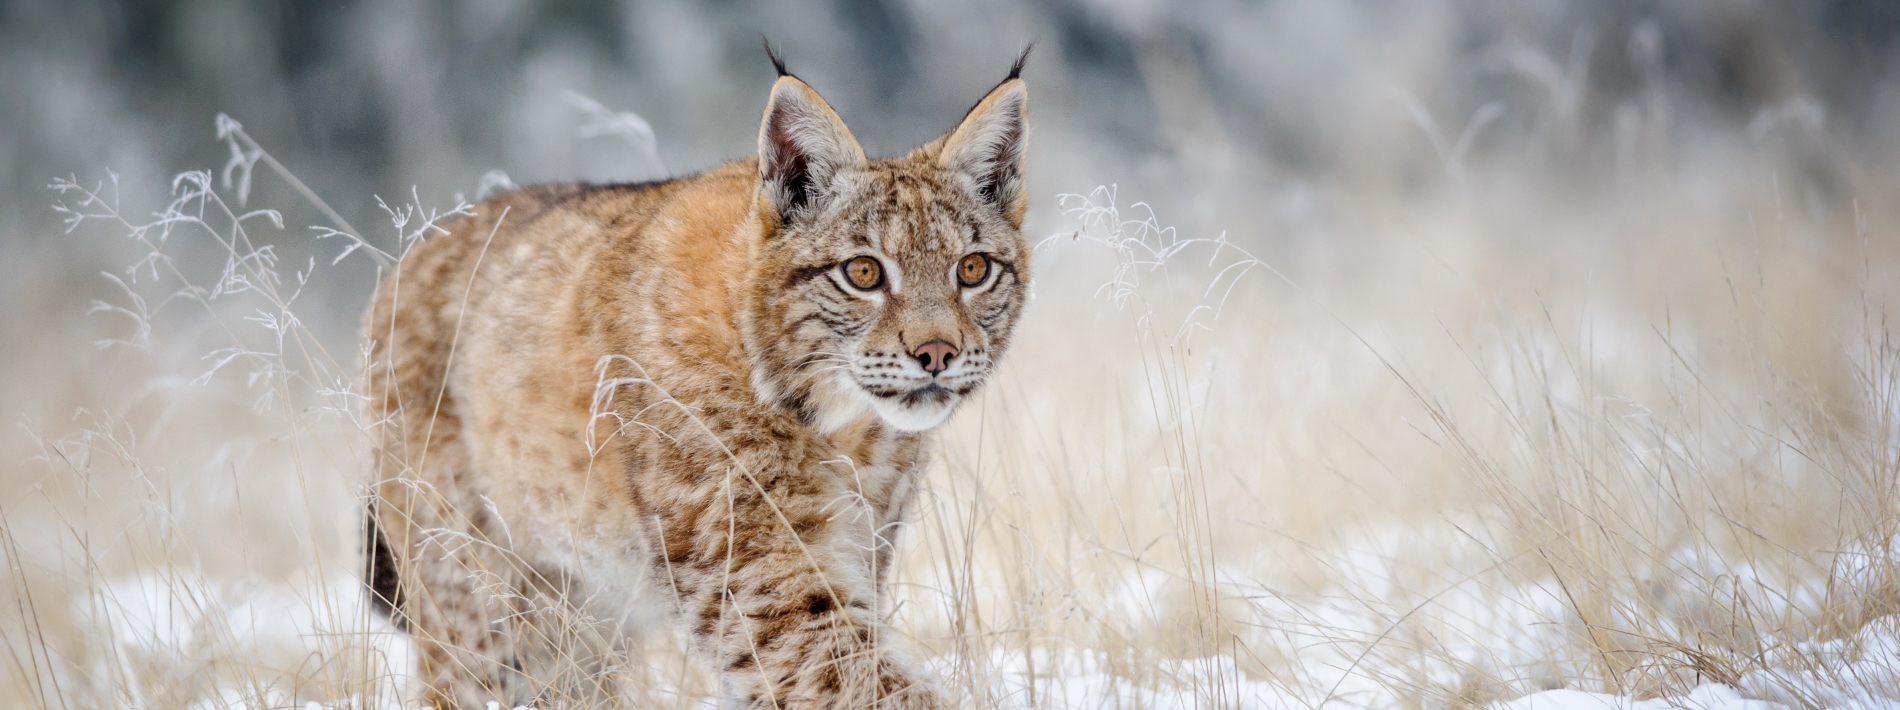 a lynx in snow